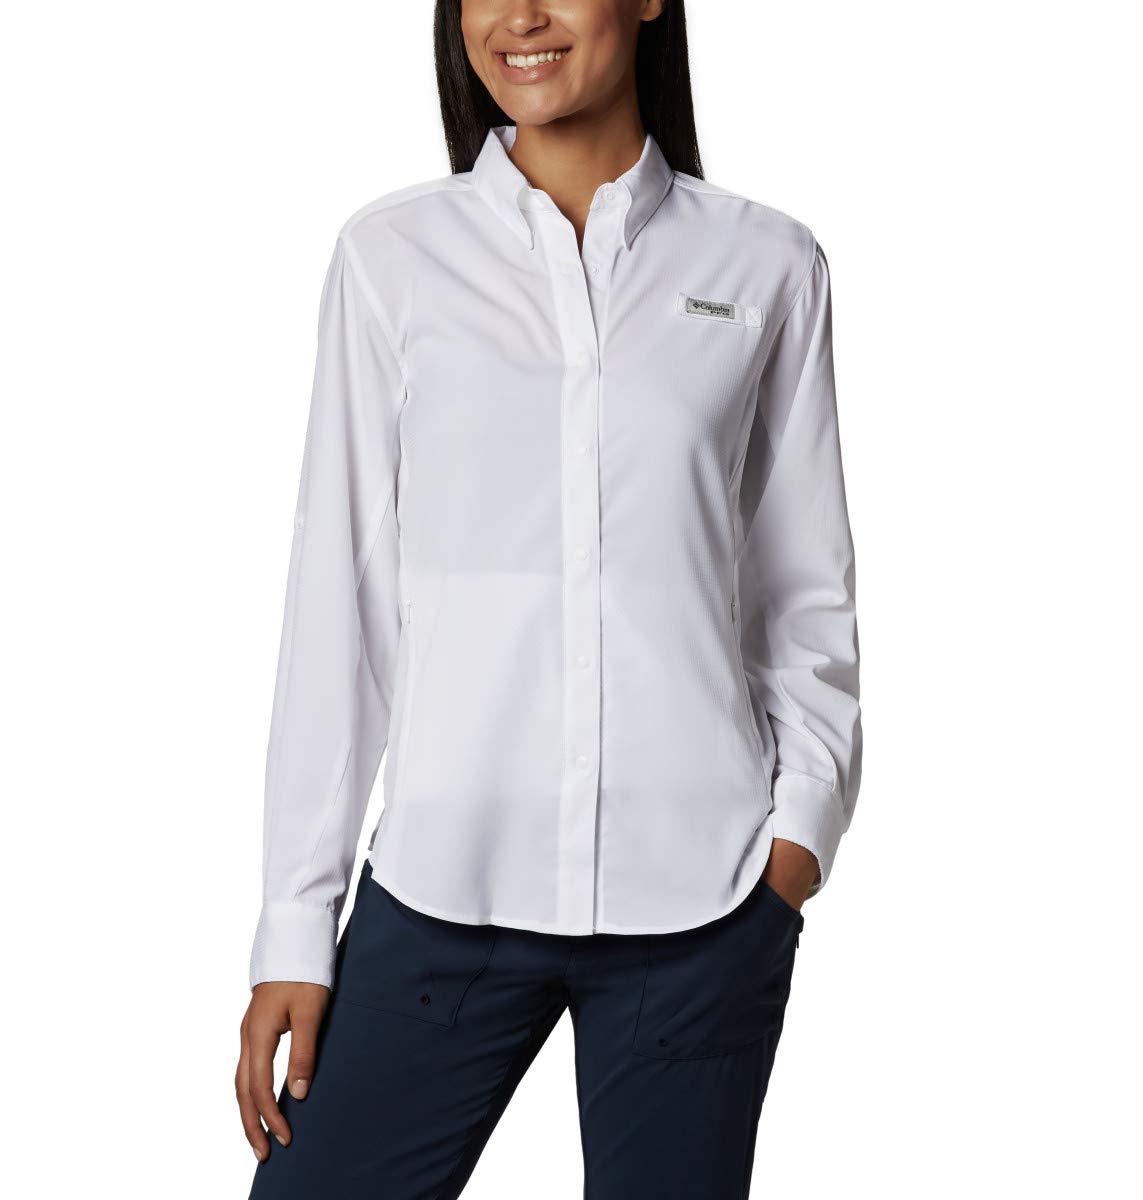 Columbia Women's PFG Tamiami II Long Sleeve Shirt, UV Sun Protection, Moisture Wicking Fabric